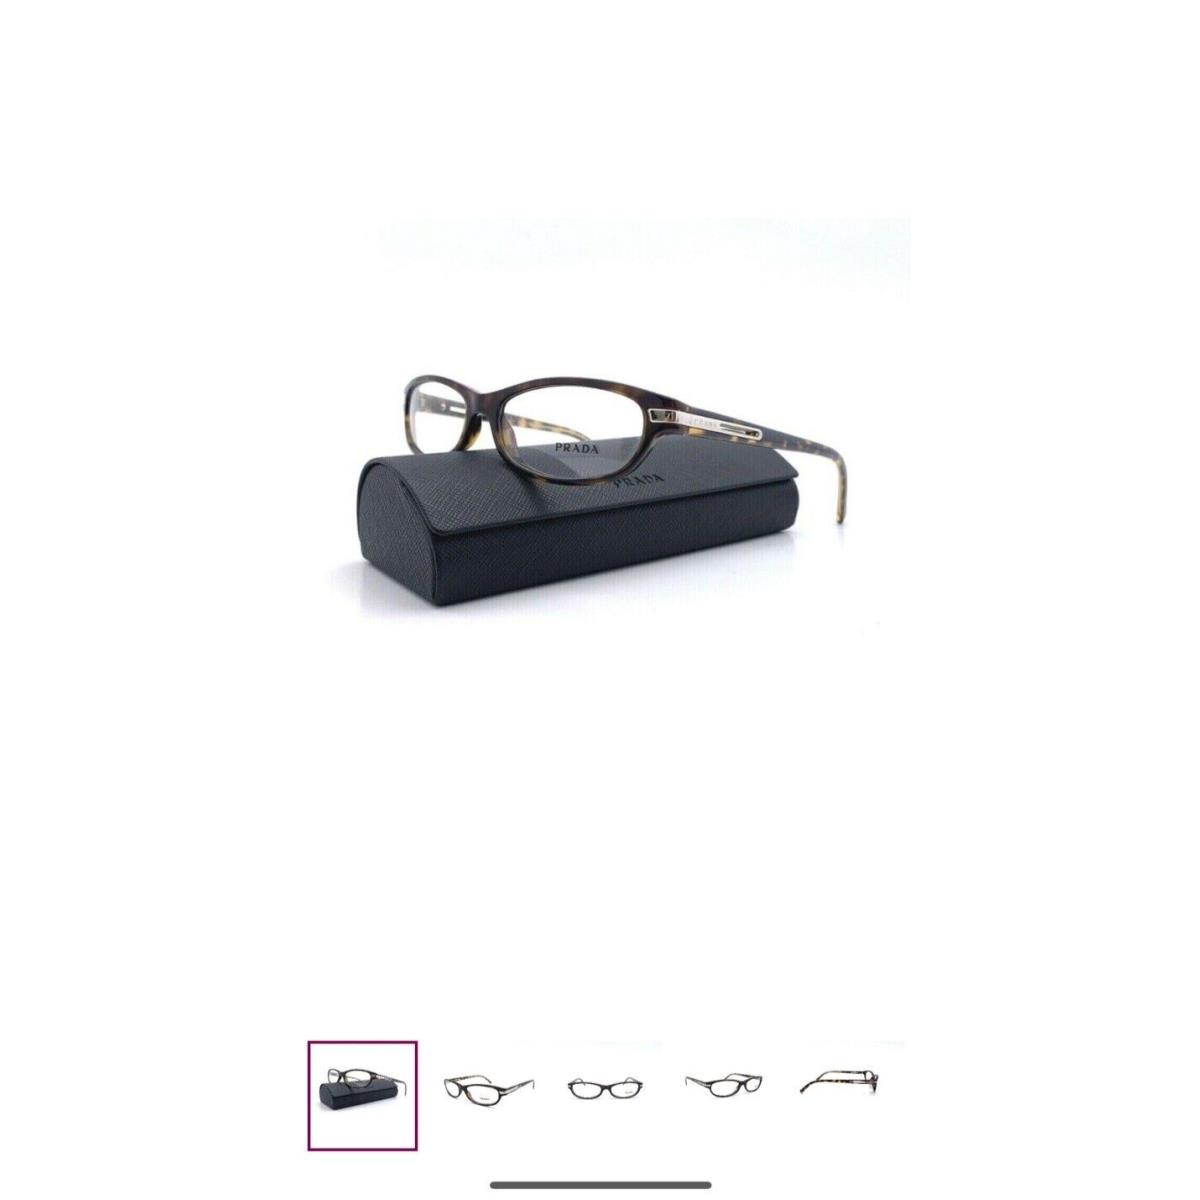 Prada Eyeglasses Acetate VPR061 2AU-101 53 16 135 Unisex Glassestortoise